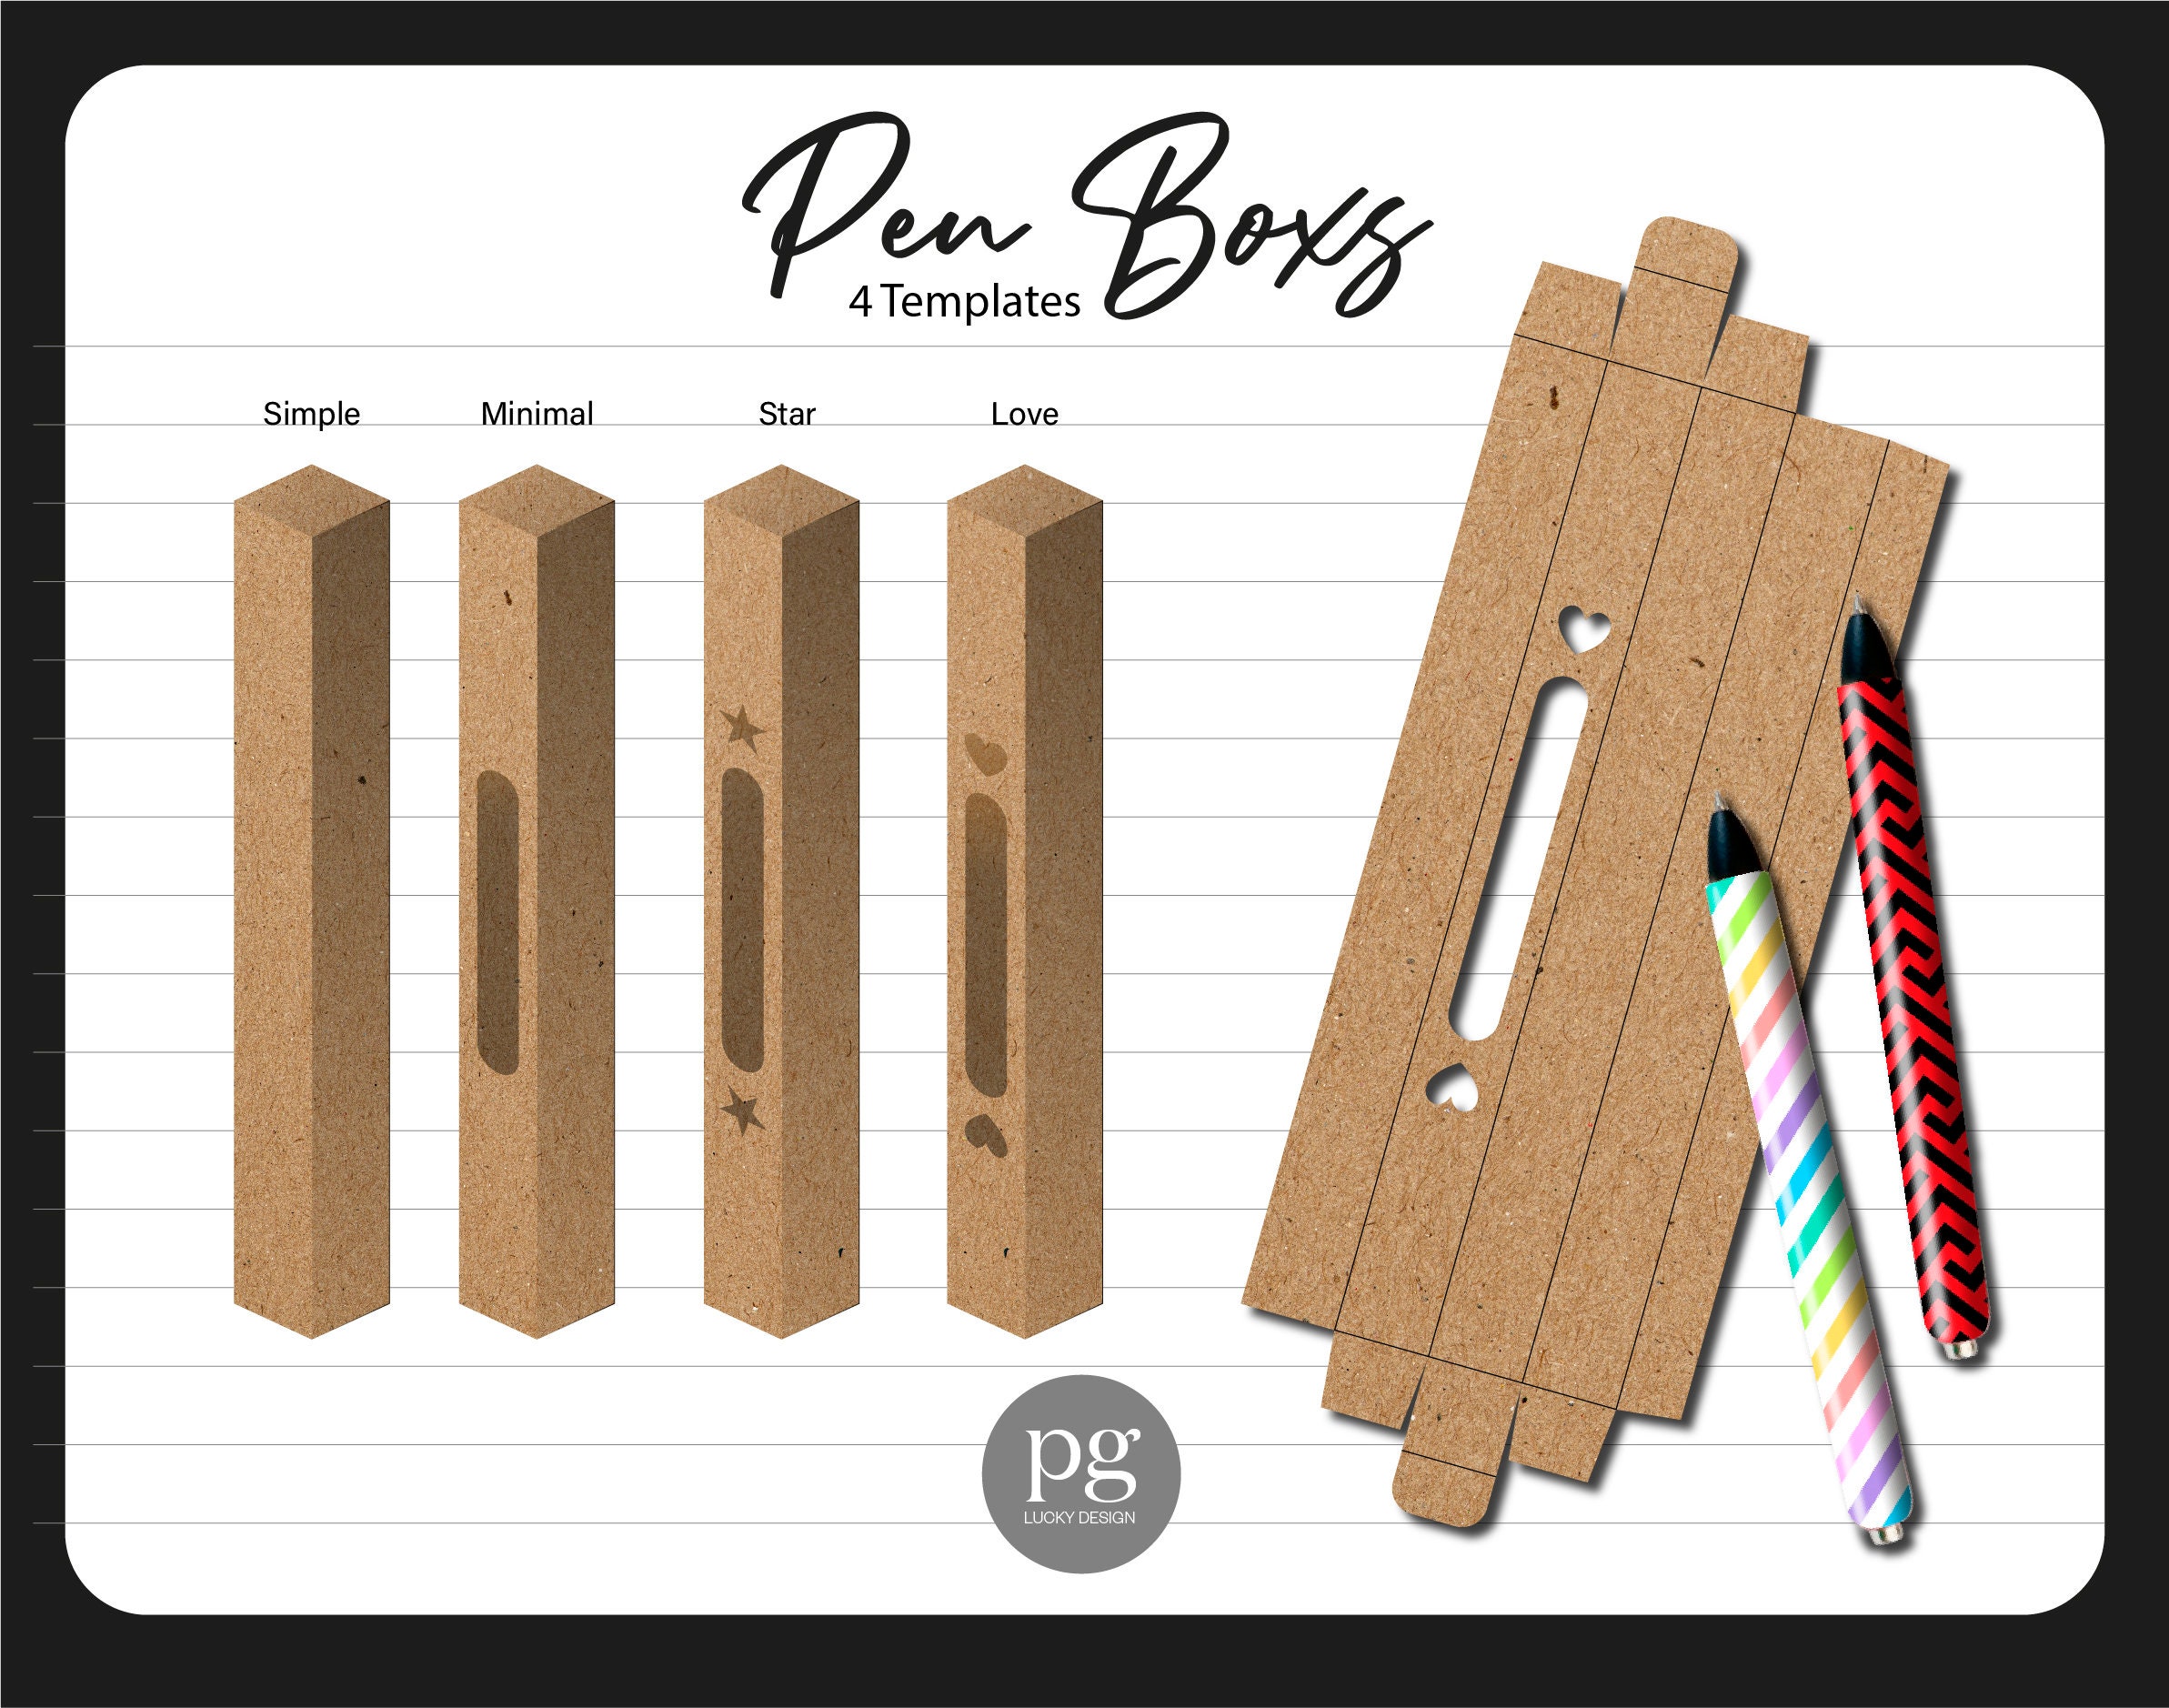 Pen Box Template 4 Bundle, Perfect Size for Inkjoy Wrap Epoxy Pen